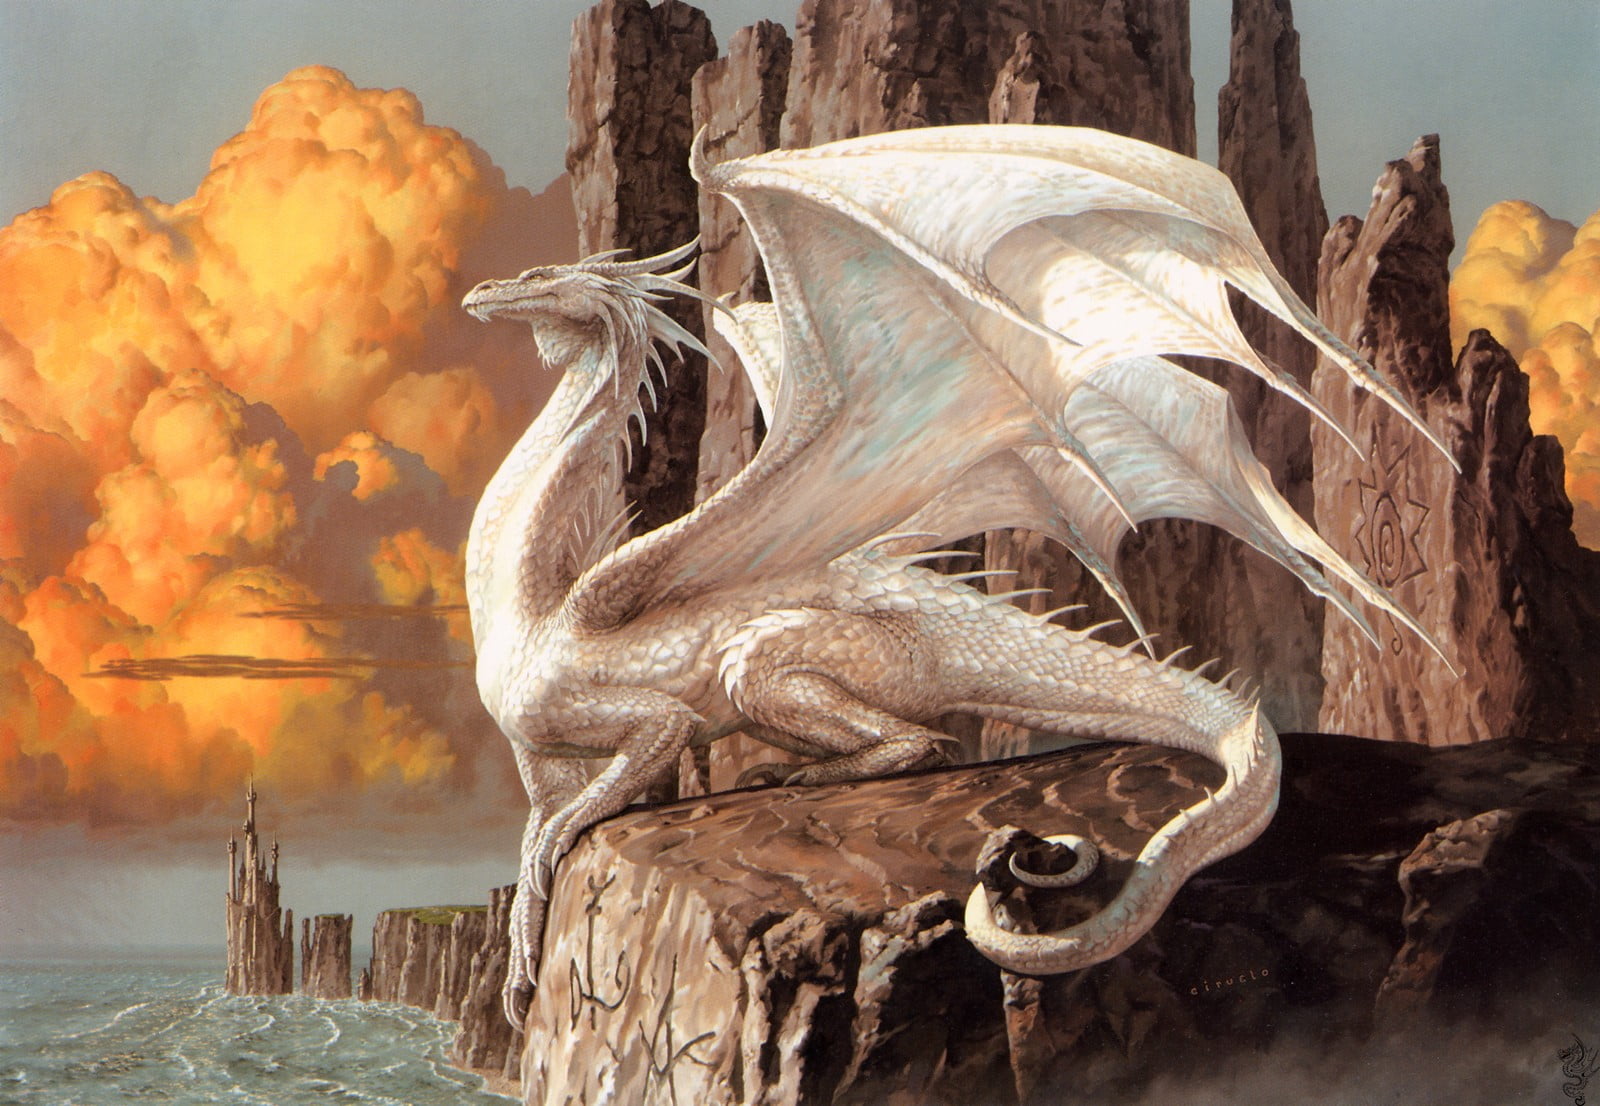 silver dragon on brown rock formation poster, dragon, Argentina, landscape, Ciruelo Cabral